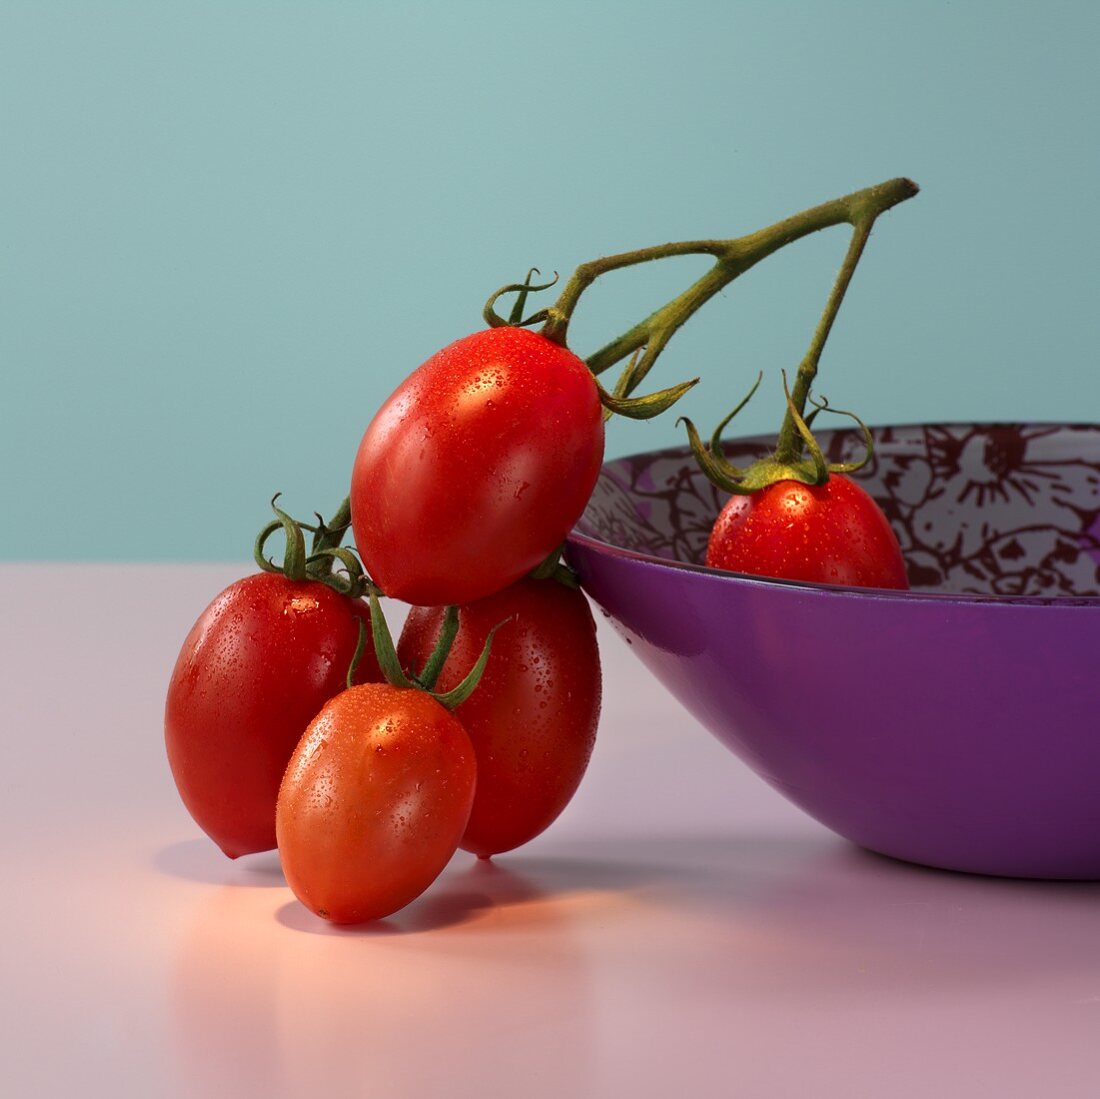 Plum tomatoes on the stem